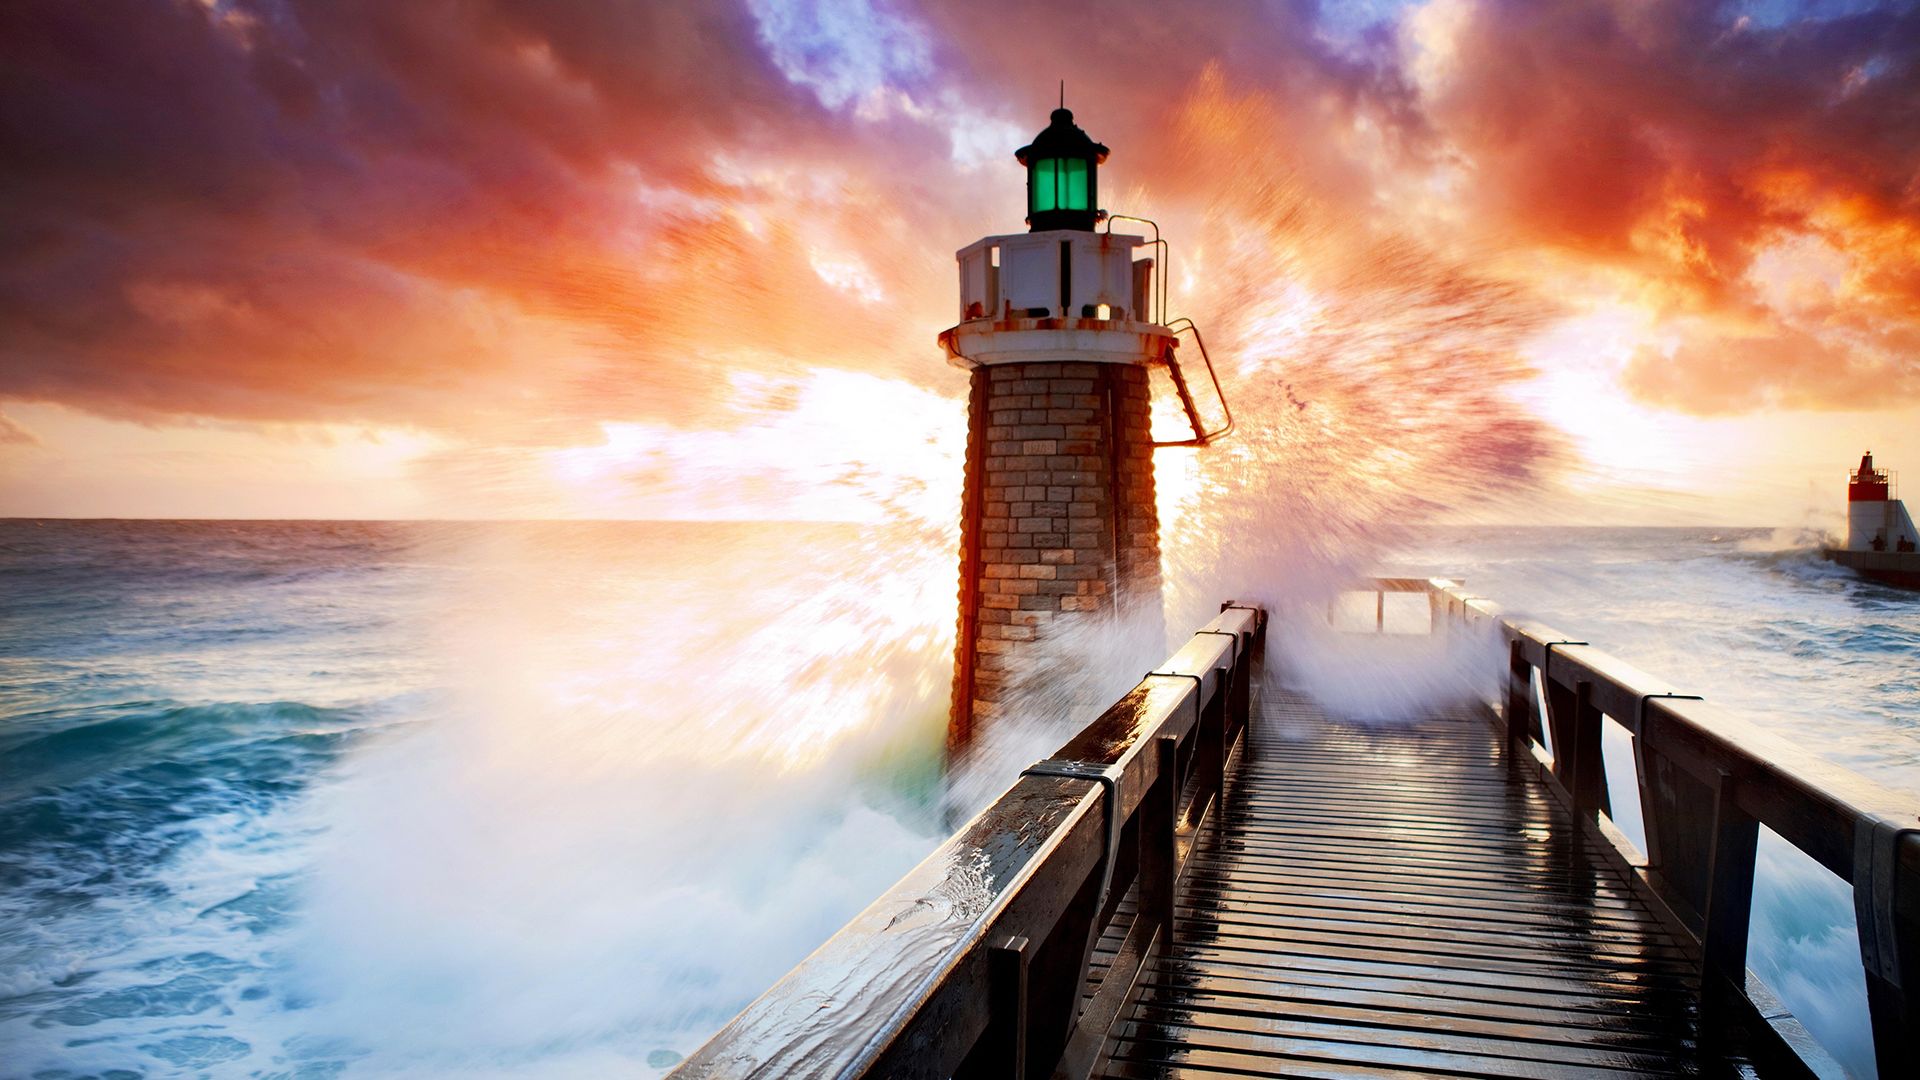 Surreal Sunrise Near Ocean Lighthouse Wallpapers